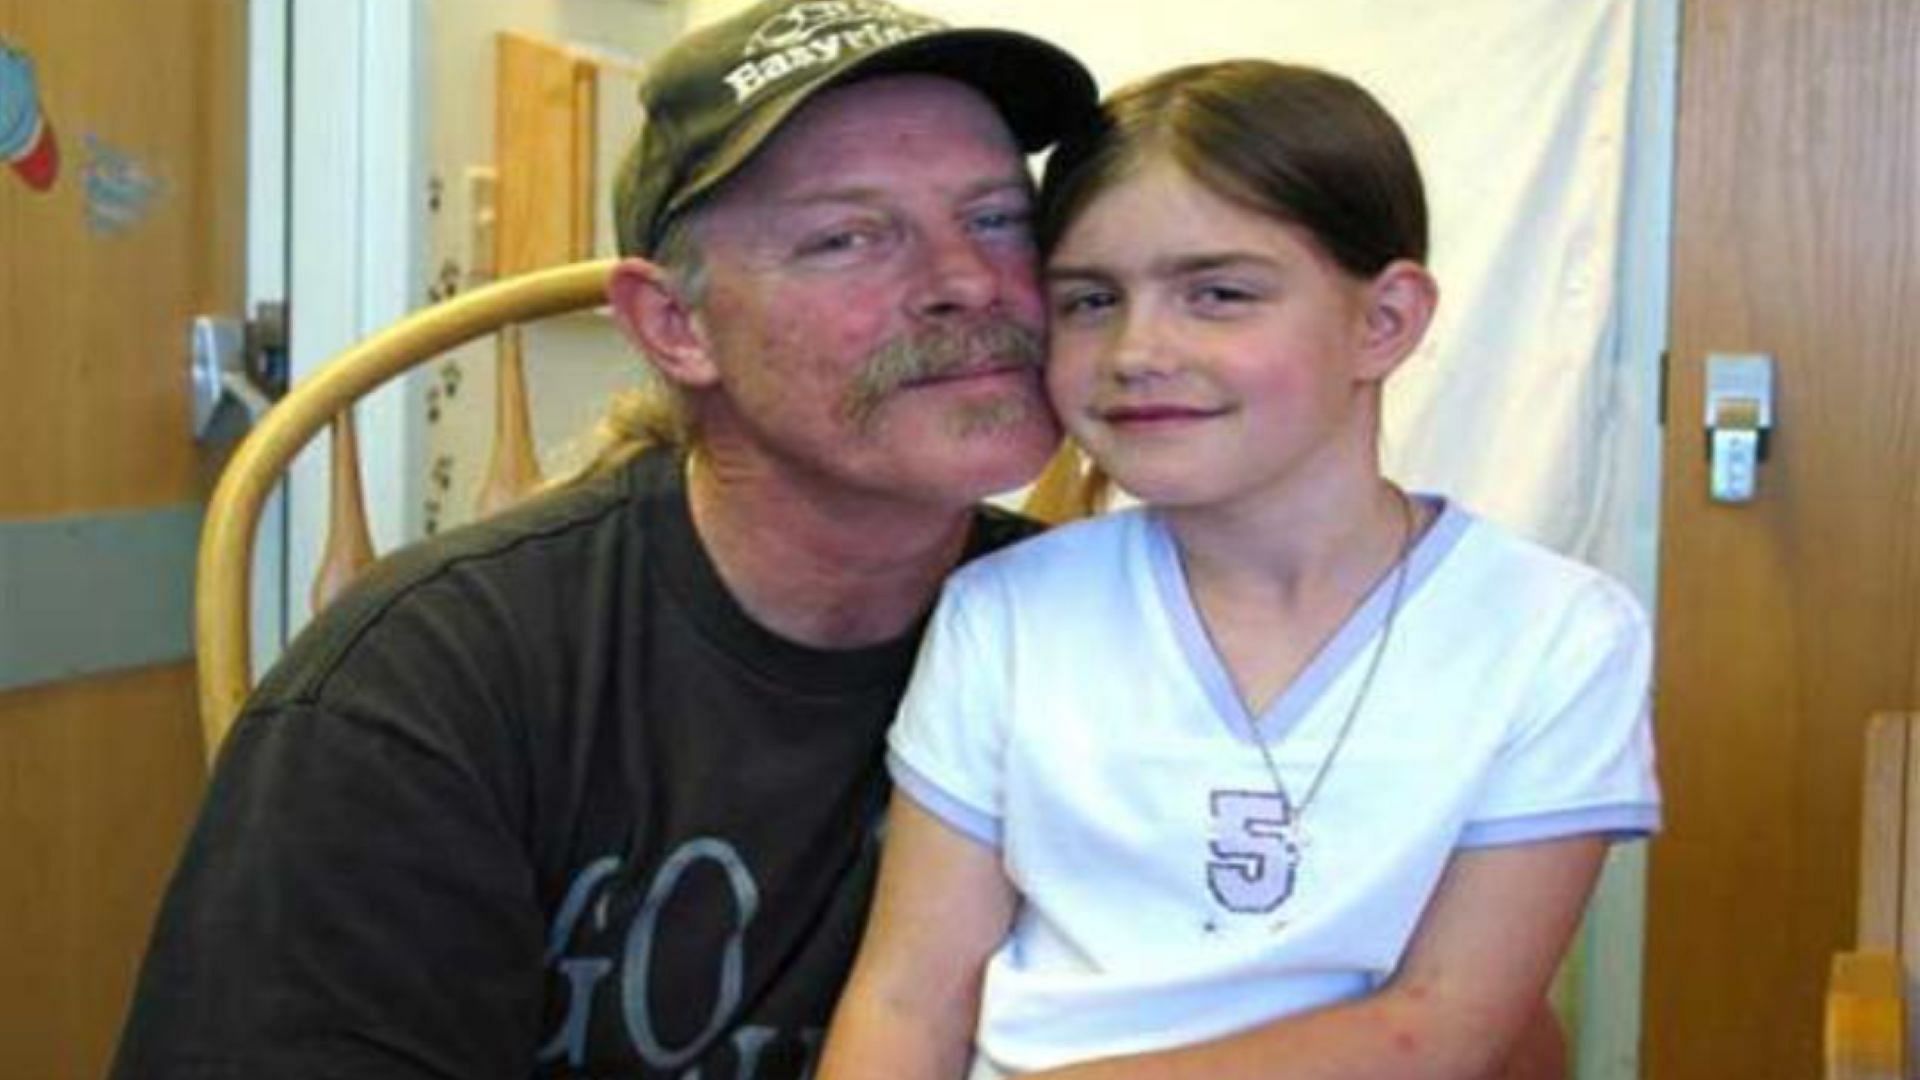 Shasta Groene with her father, Steve Groene (Image via KOOTENAI COUNTY SHERIFF DEPT)